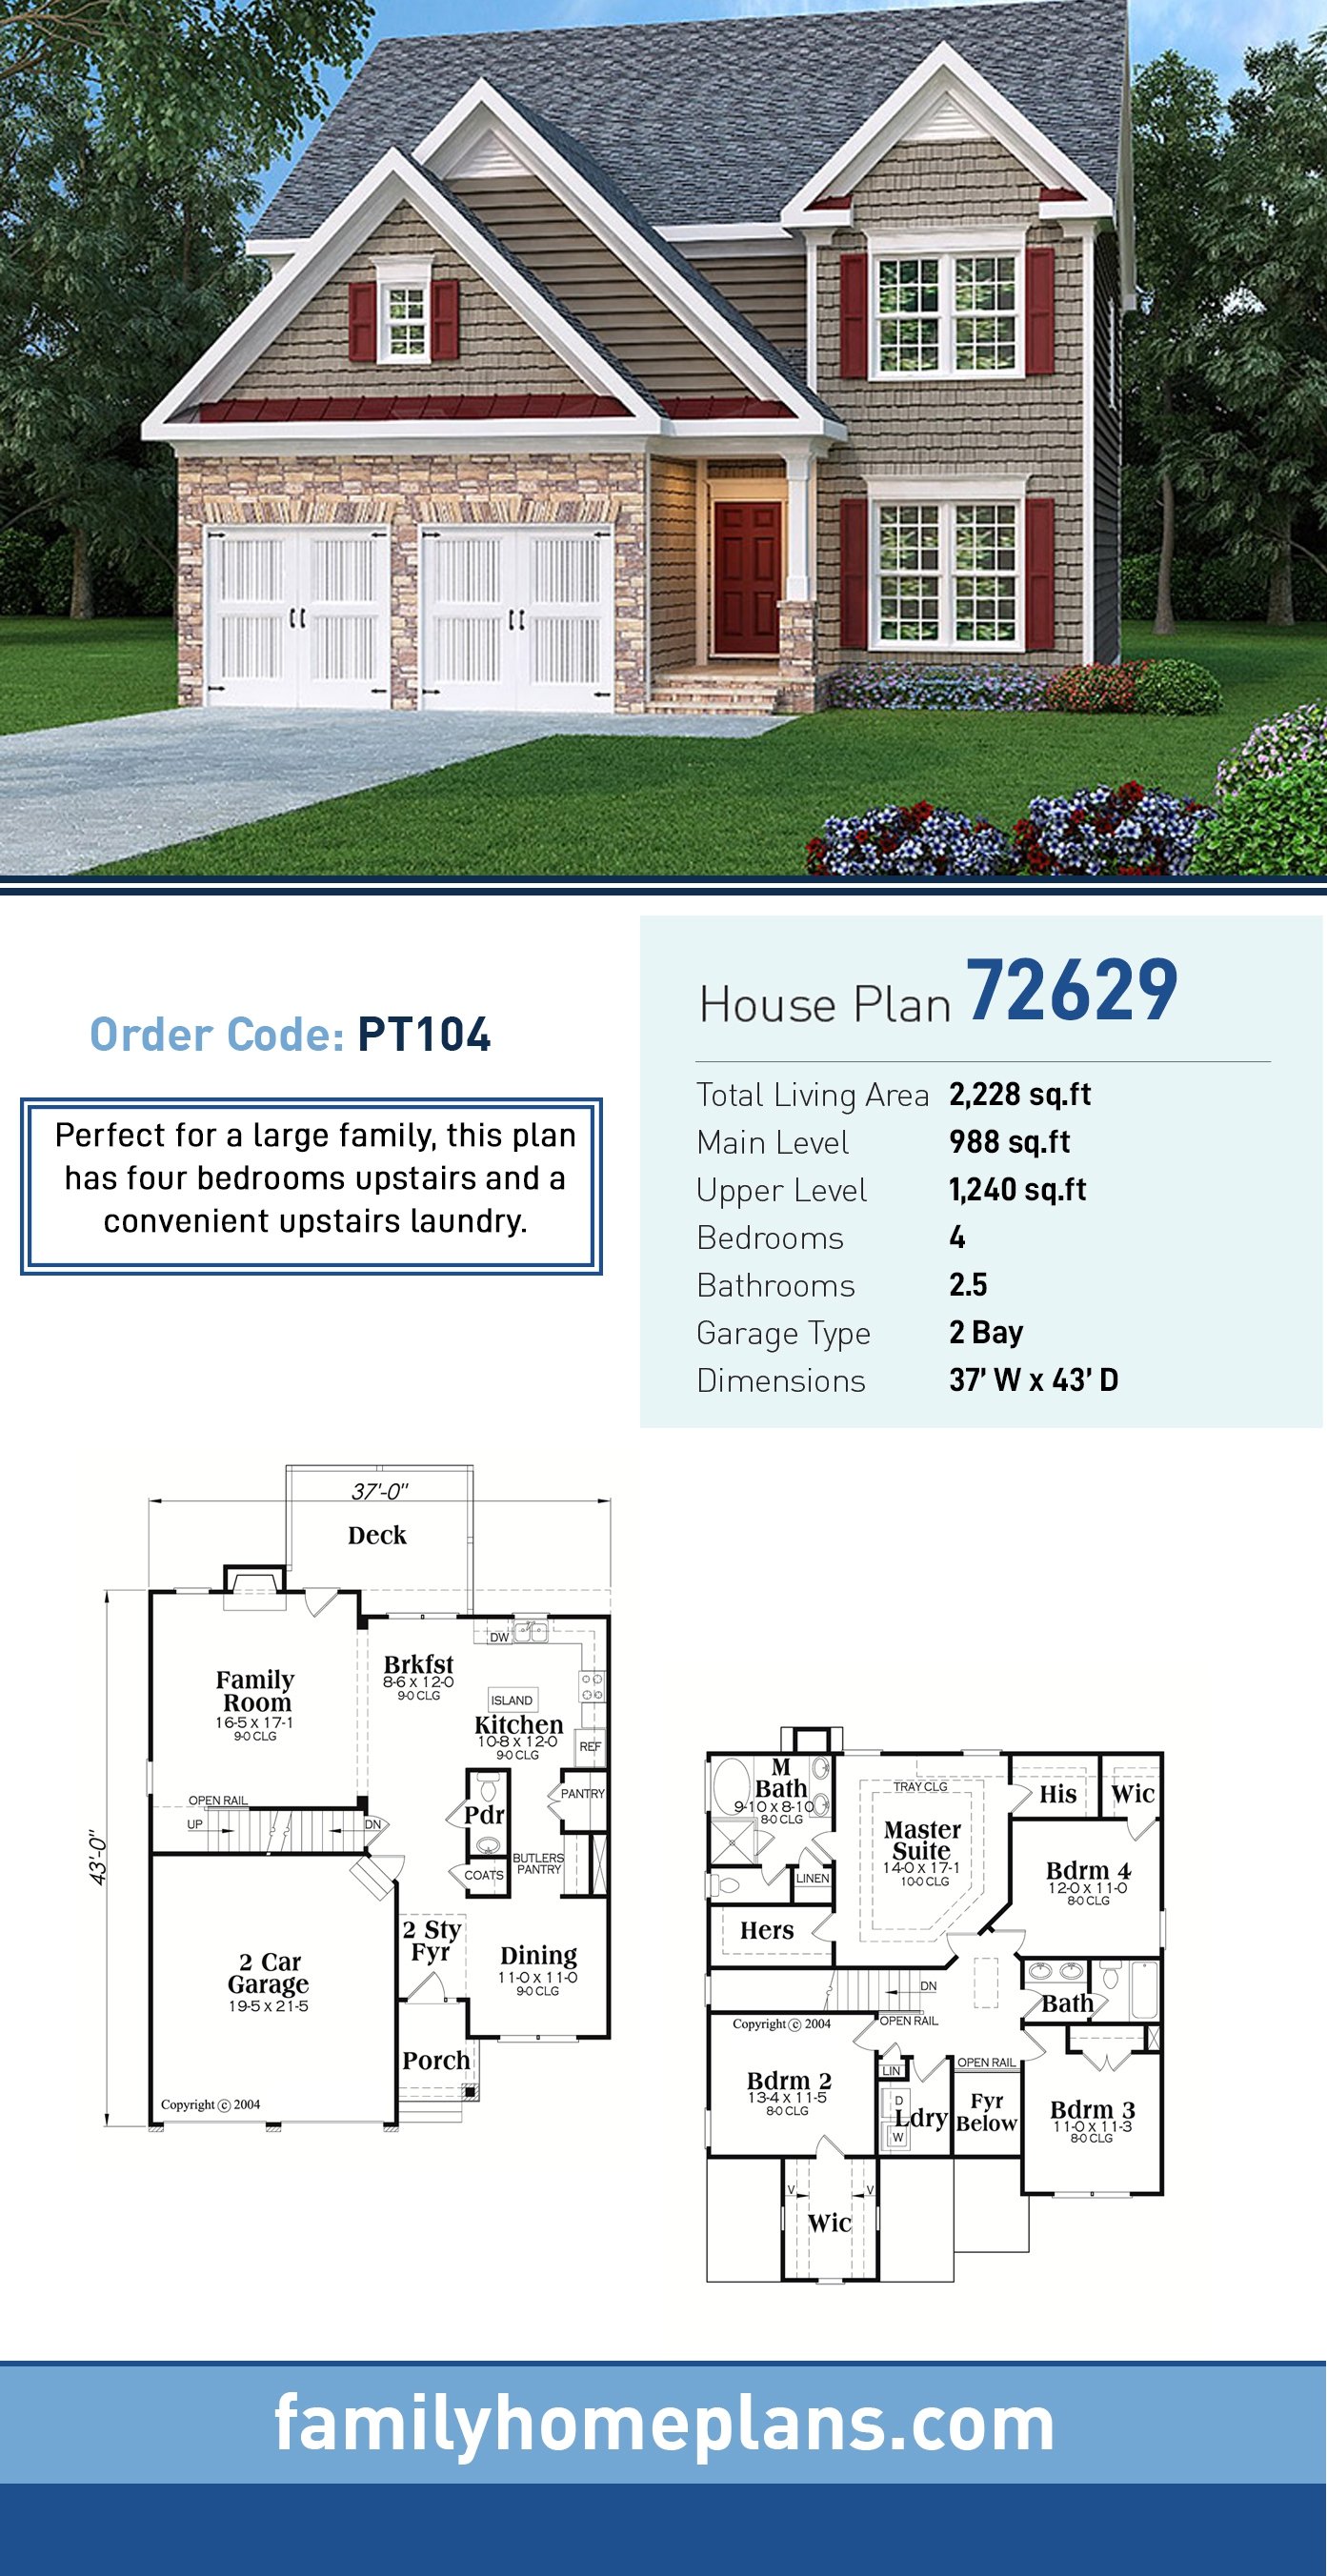 House Plan 72629